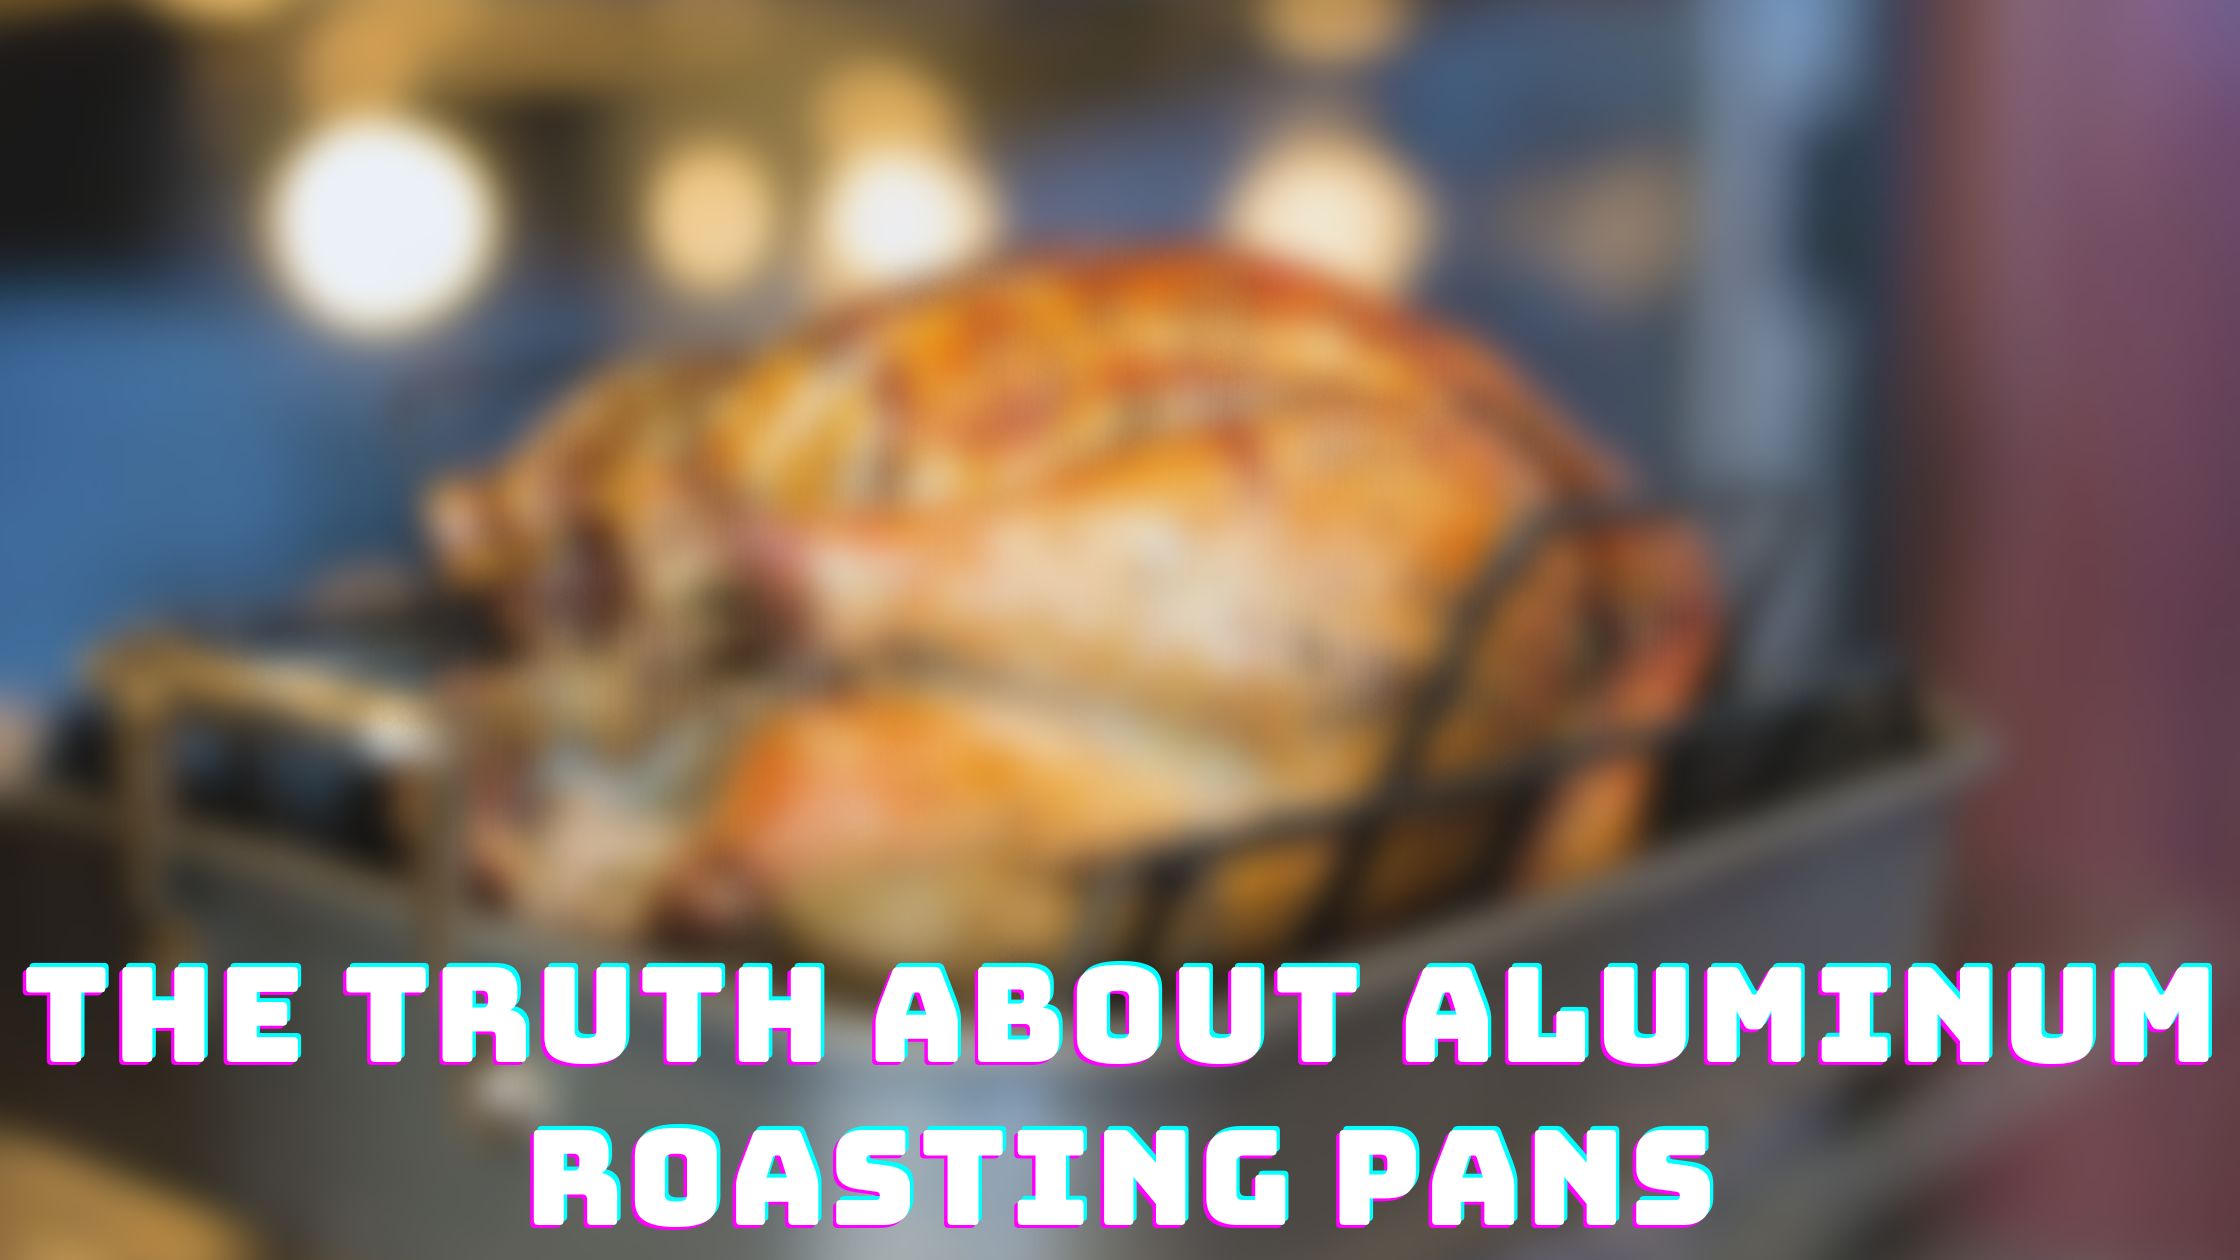 Are Aluminum Roasting Pans Safe